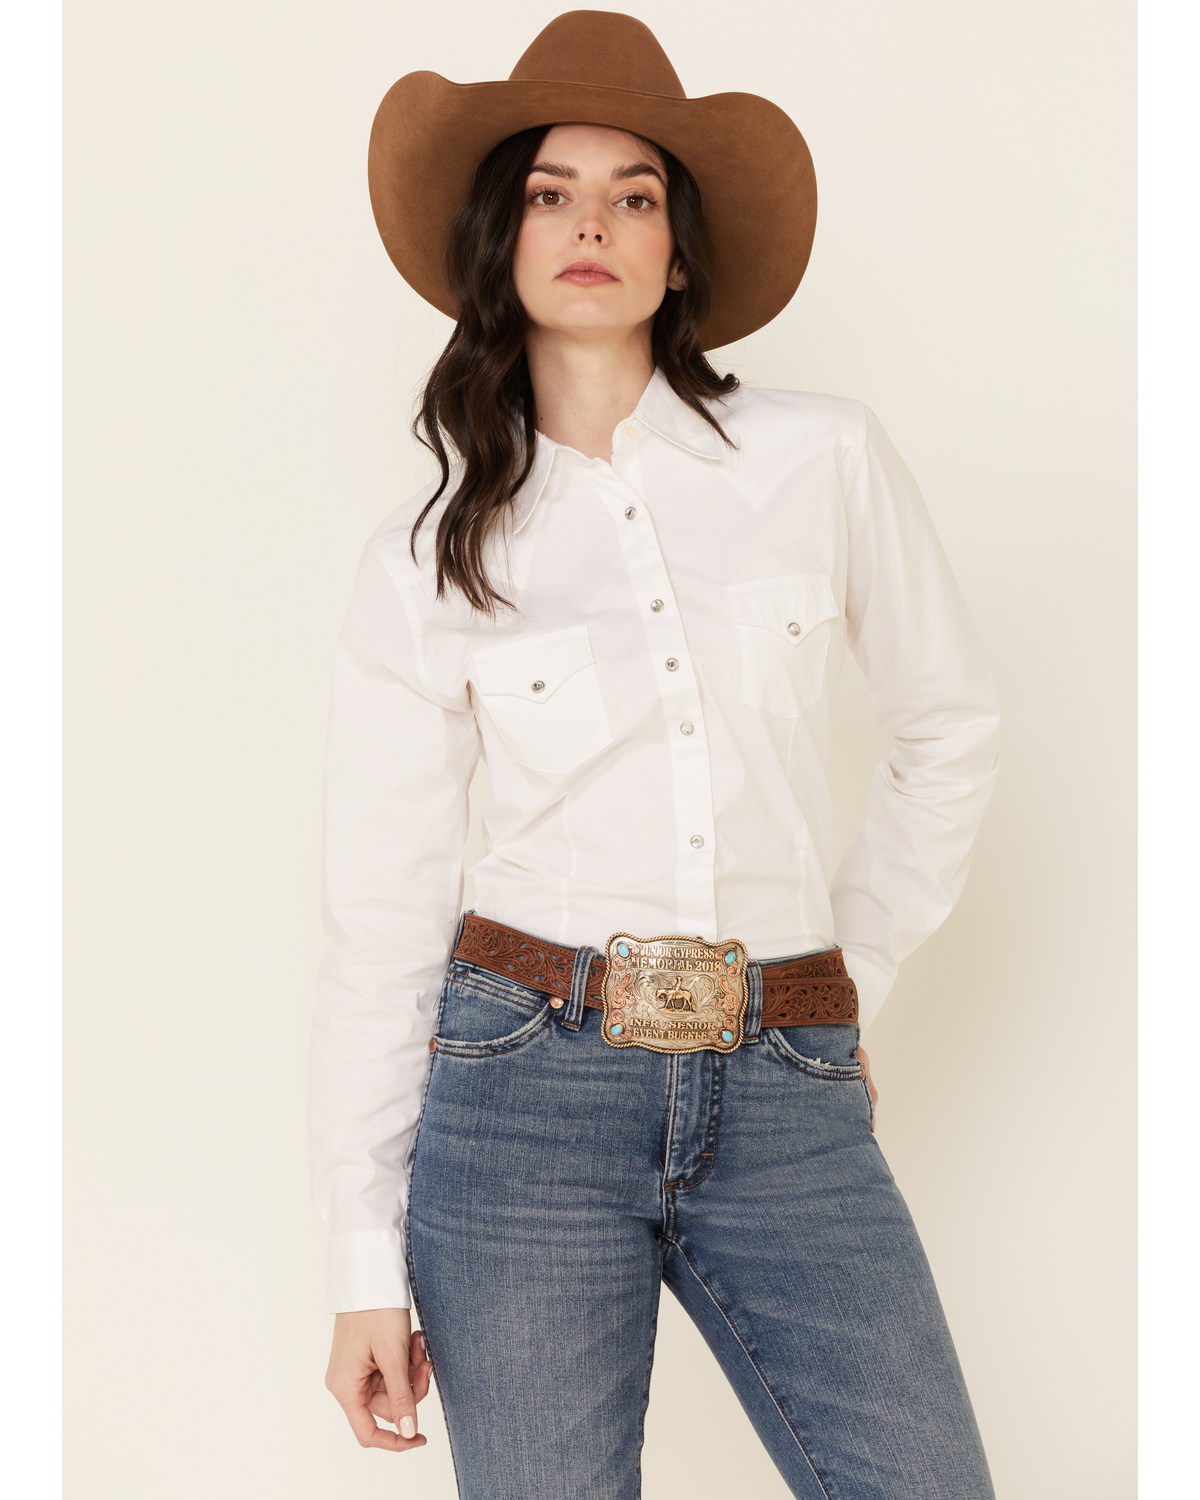 Wrangler Women's Solid Long Sleeve Rhinestone Snap Western Shirt